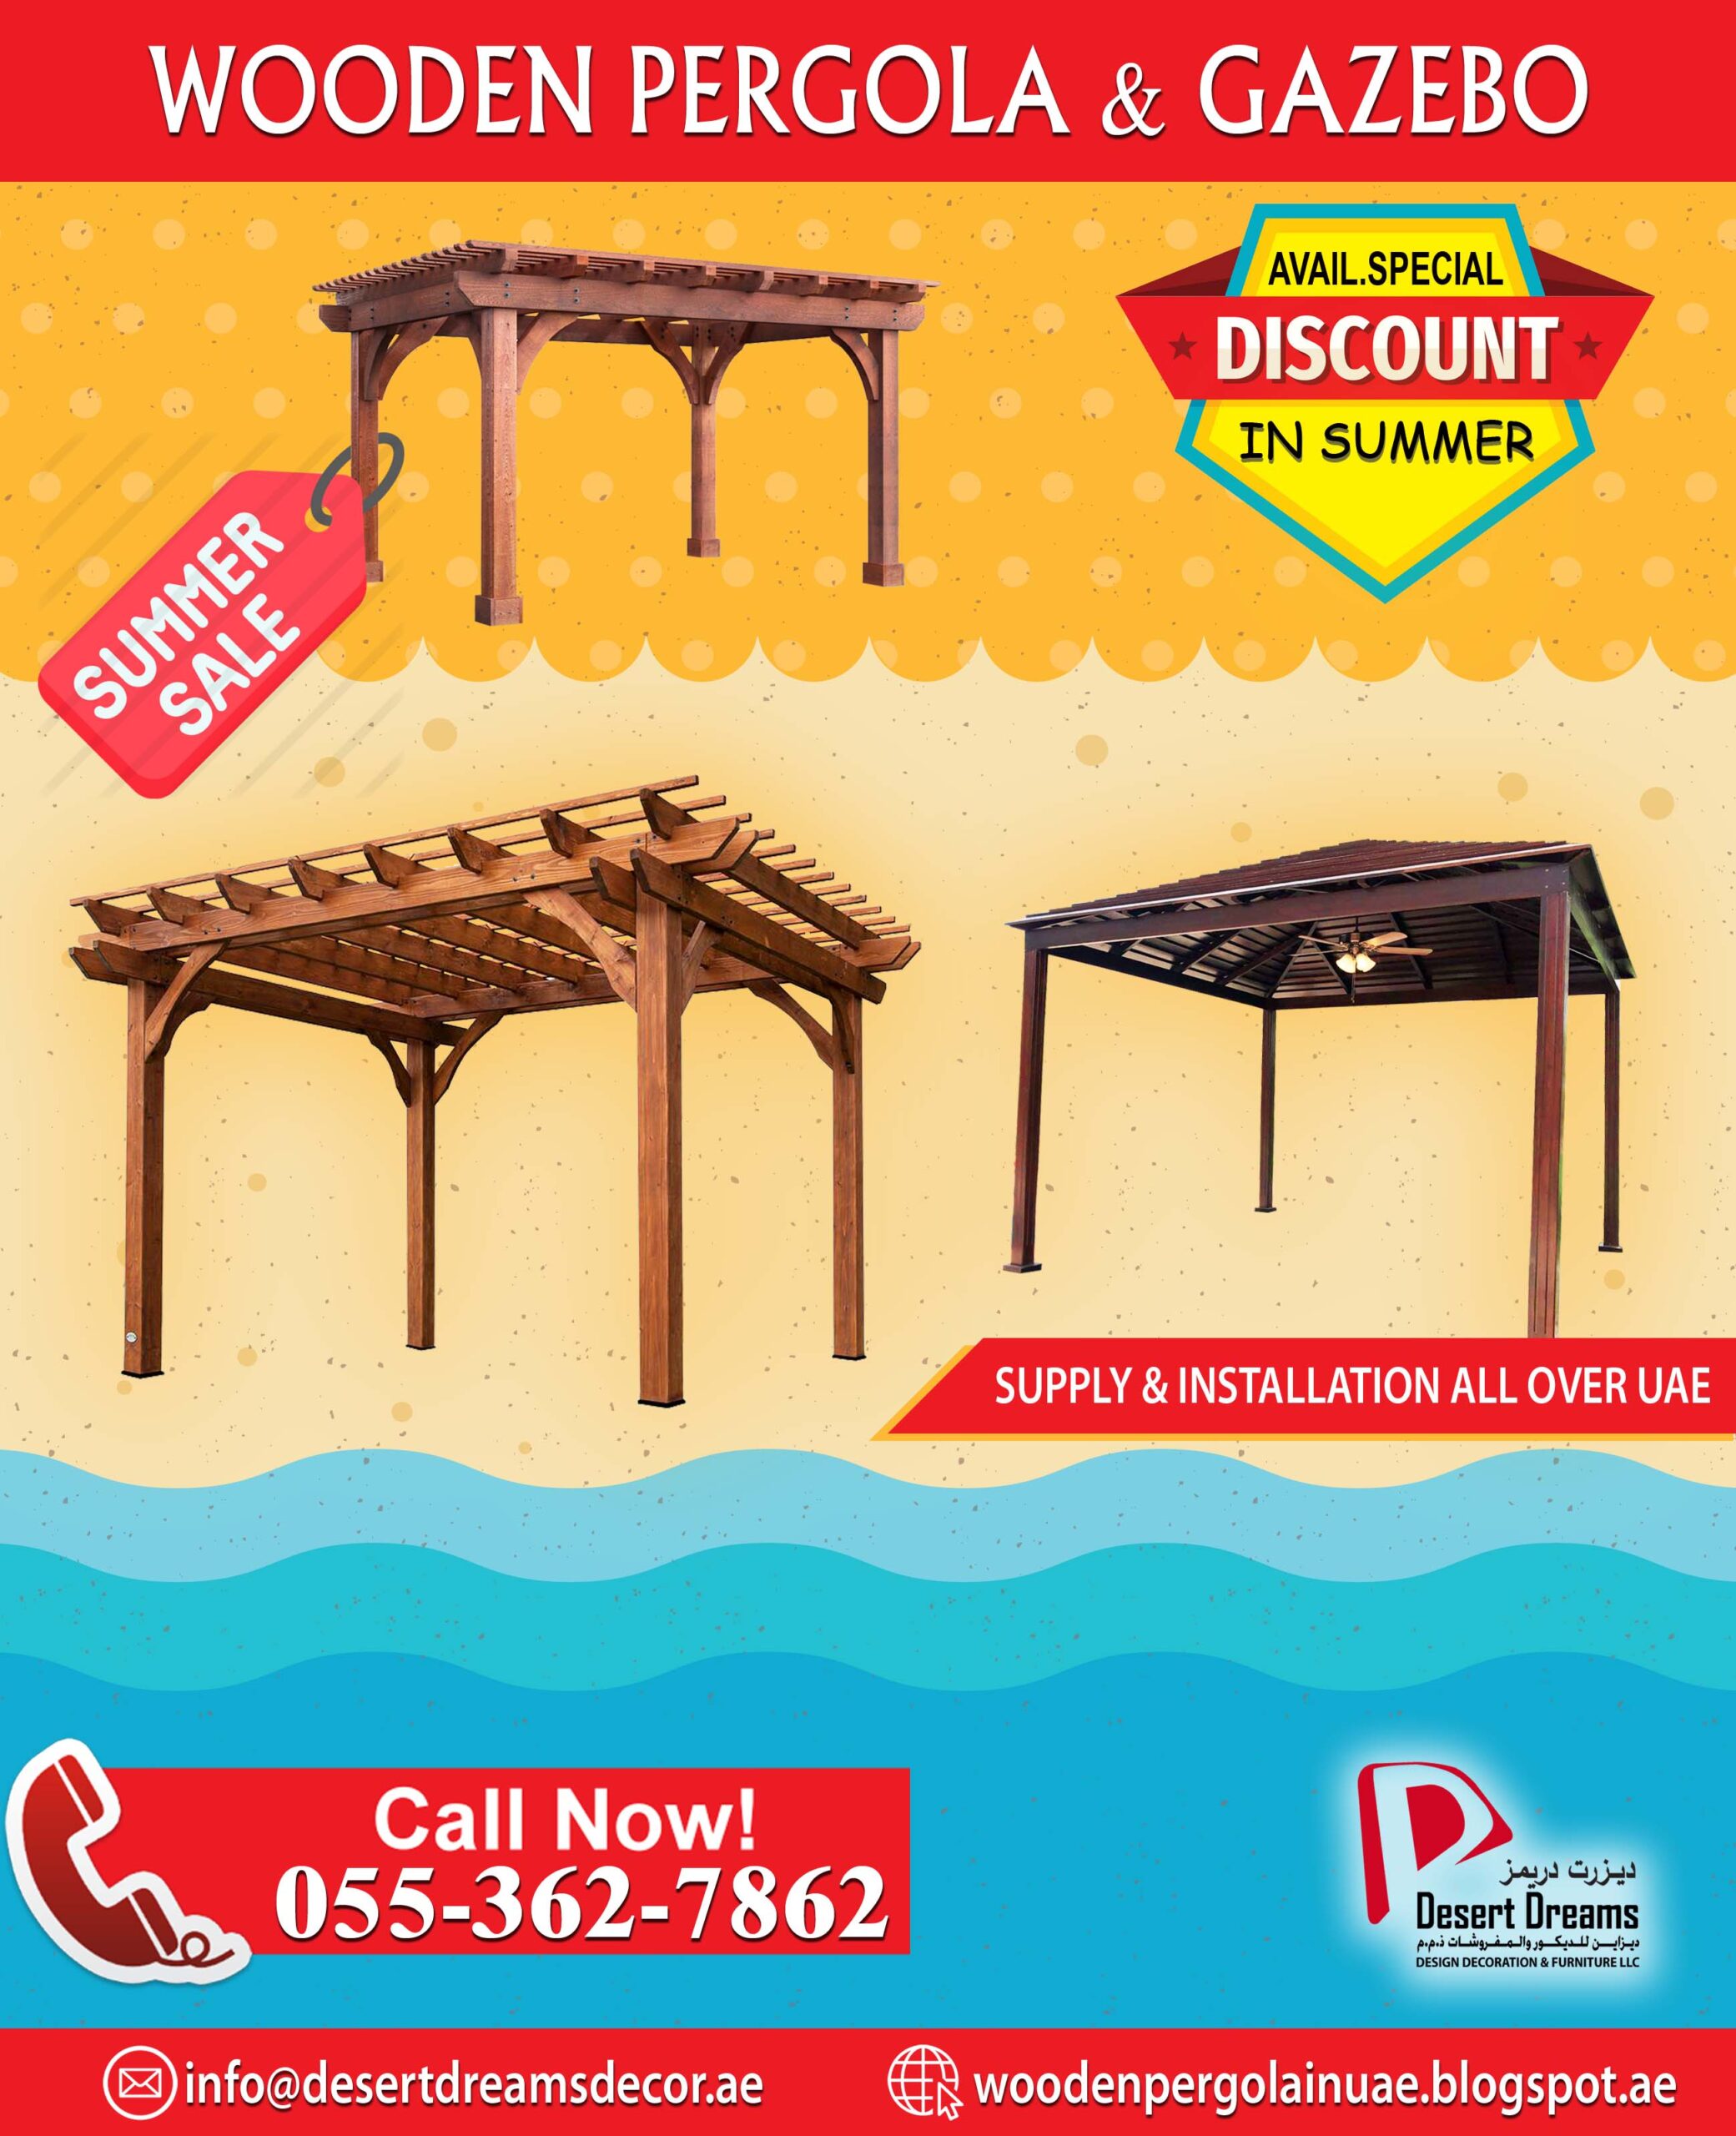 Wooden Pergola with Summer Sale Discount in UAE.jpg